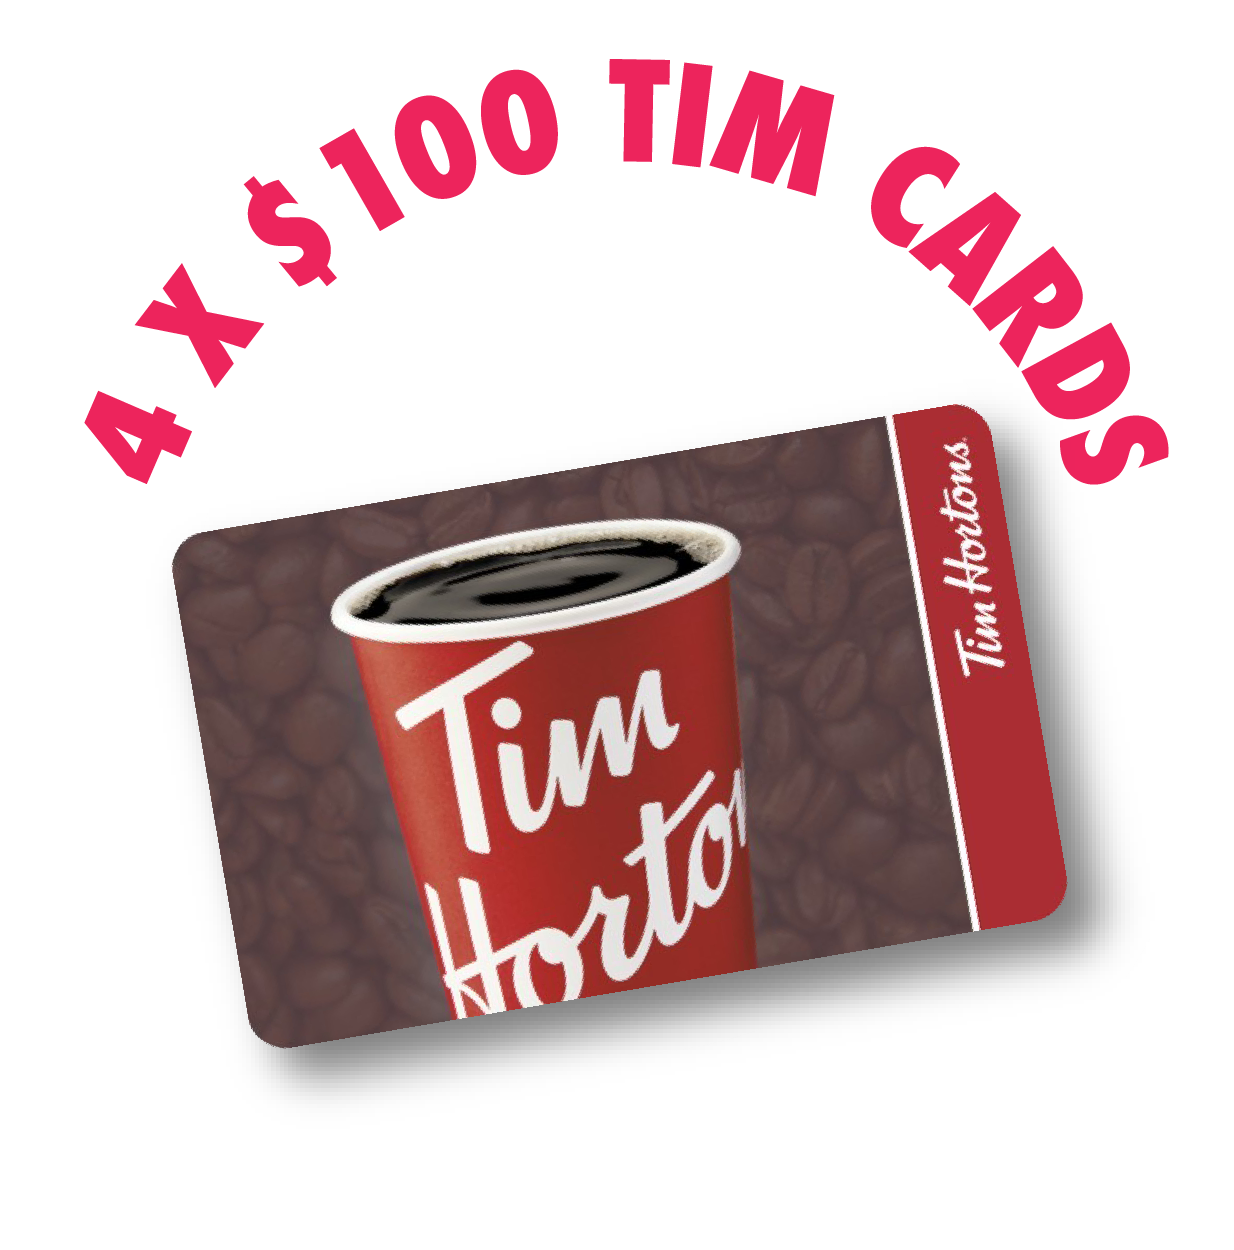 4 x $100 TIM CARDS